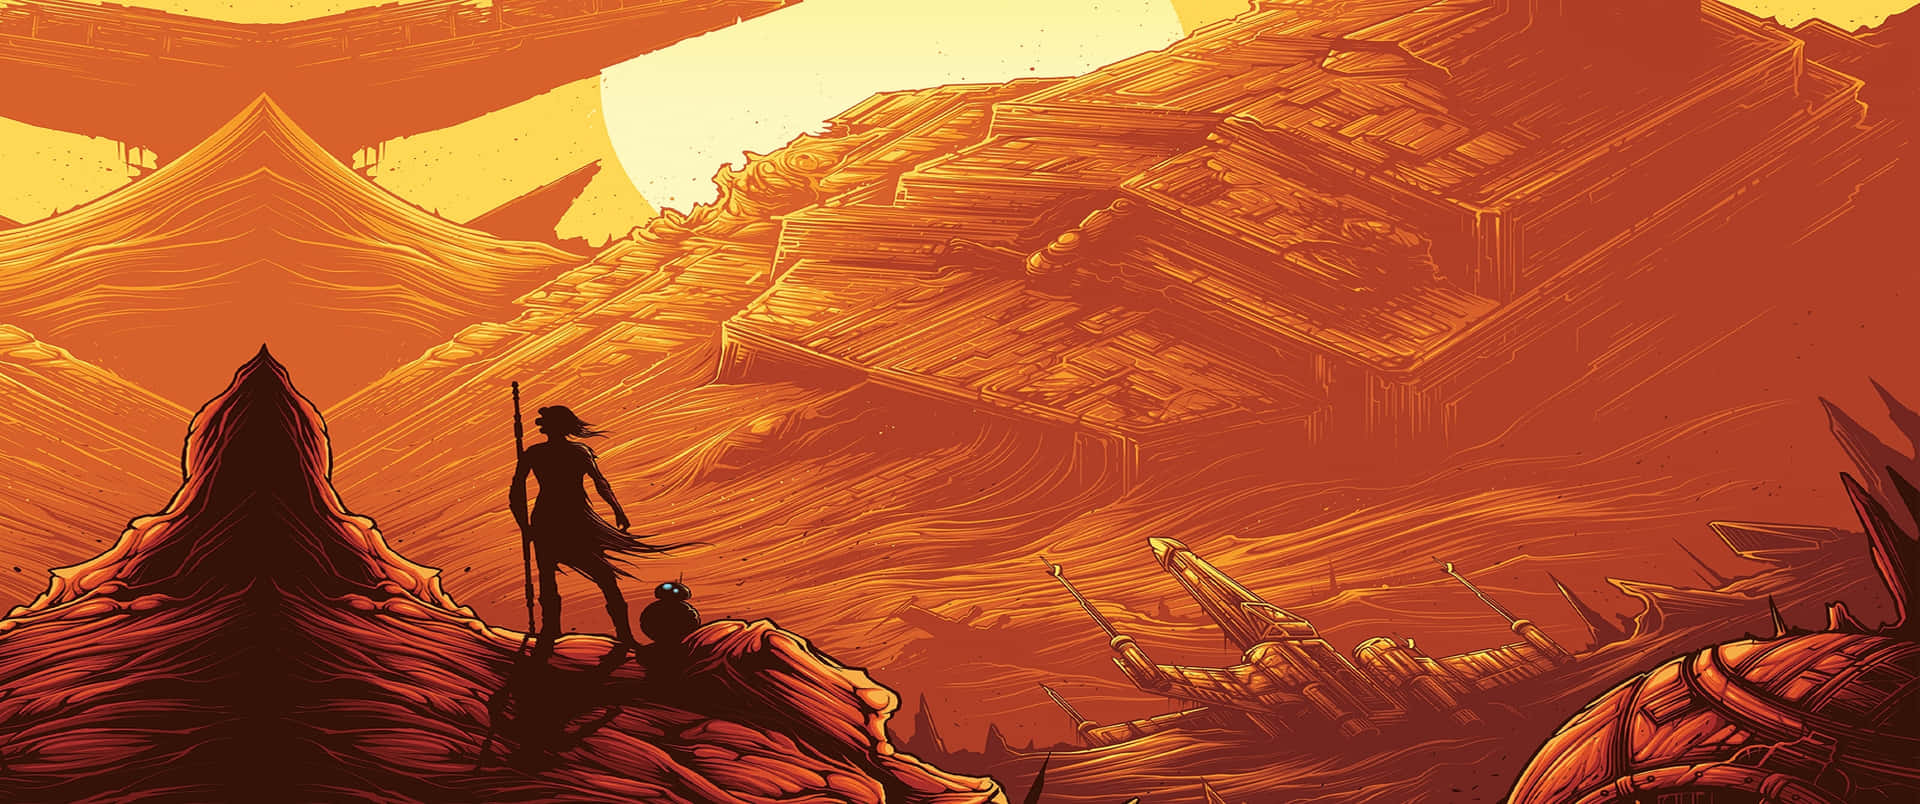 Star Wars Desert Watchtower Ultra Wide Wallpaper